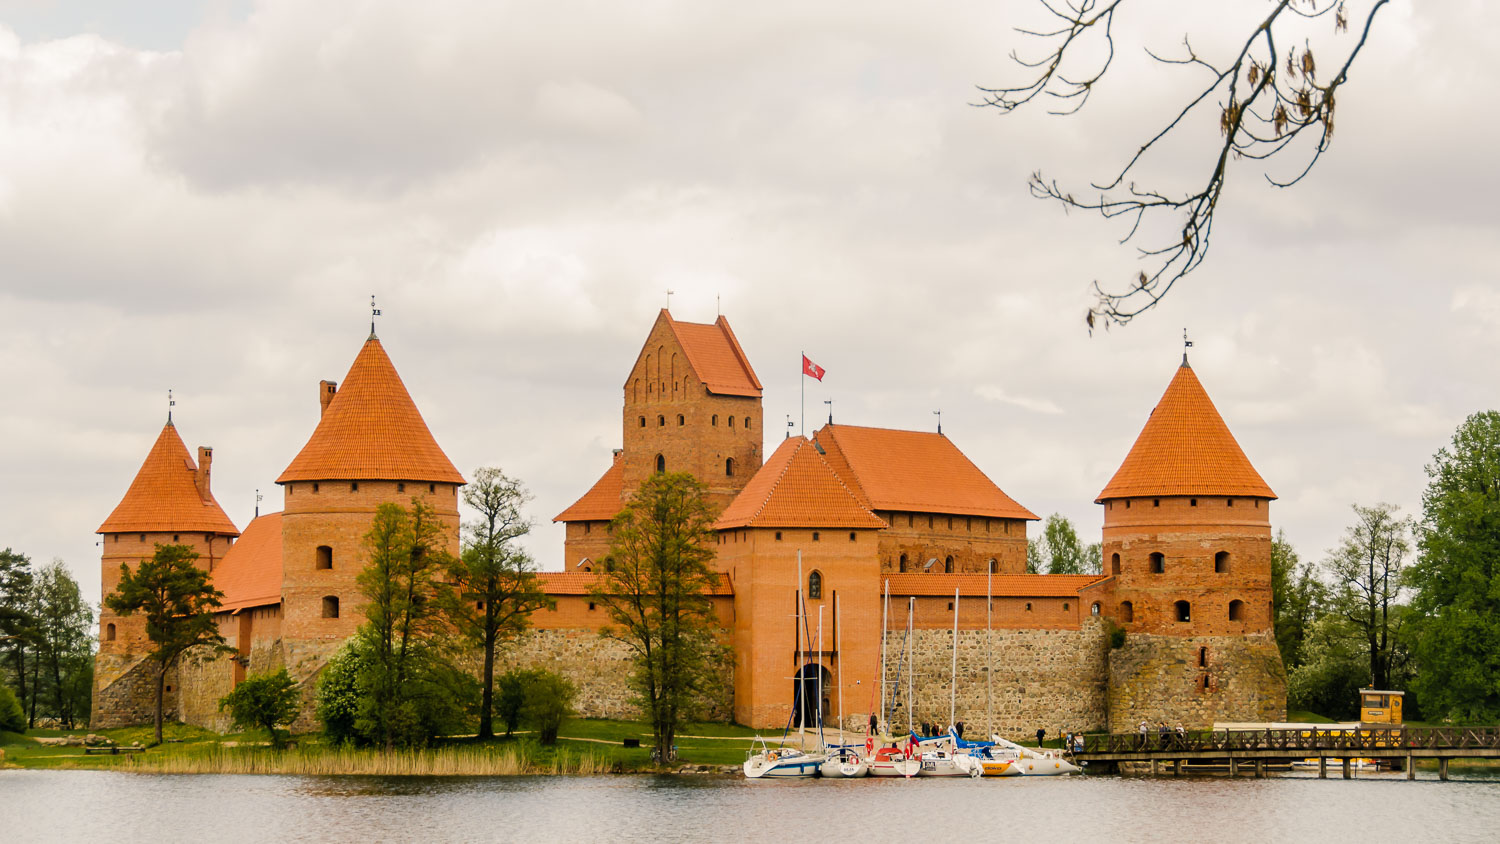 LI090107-Trakai-Castle_v1.jpg